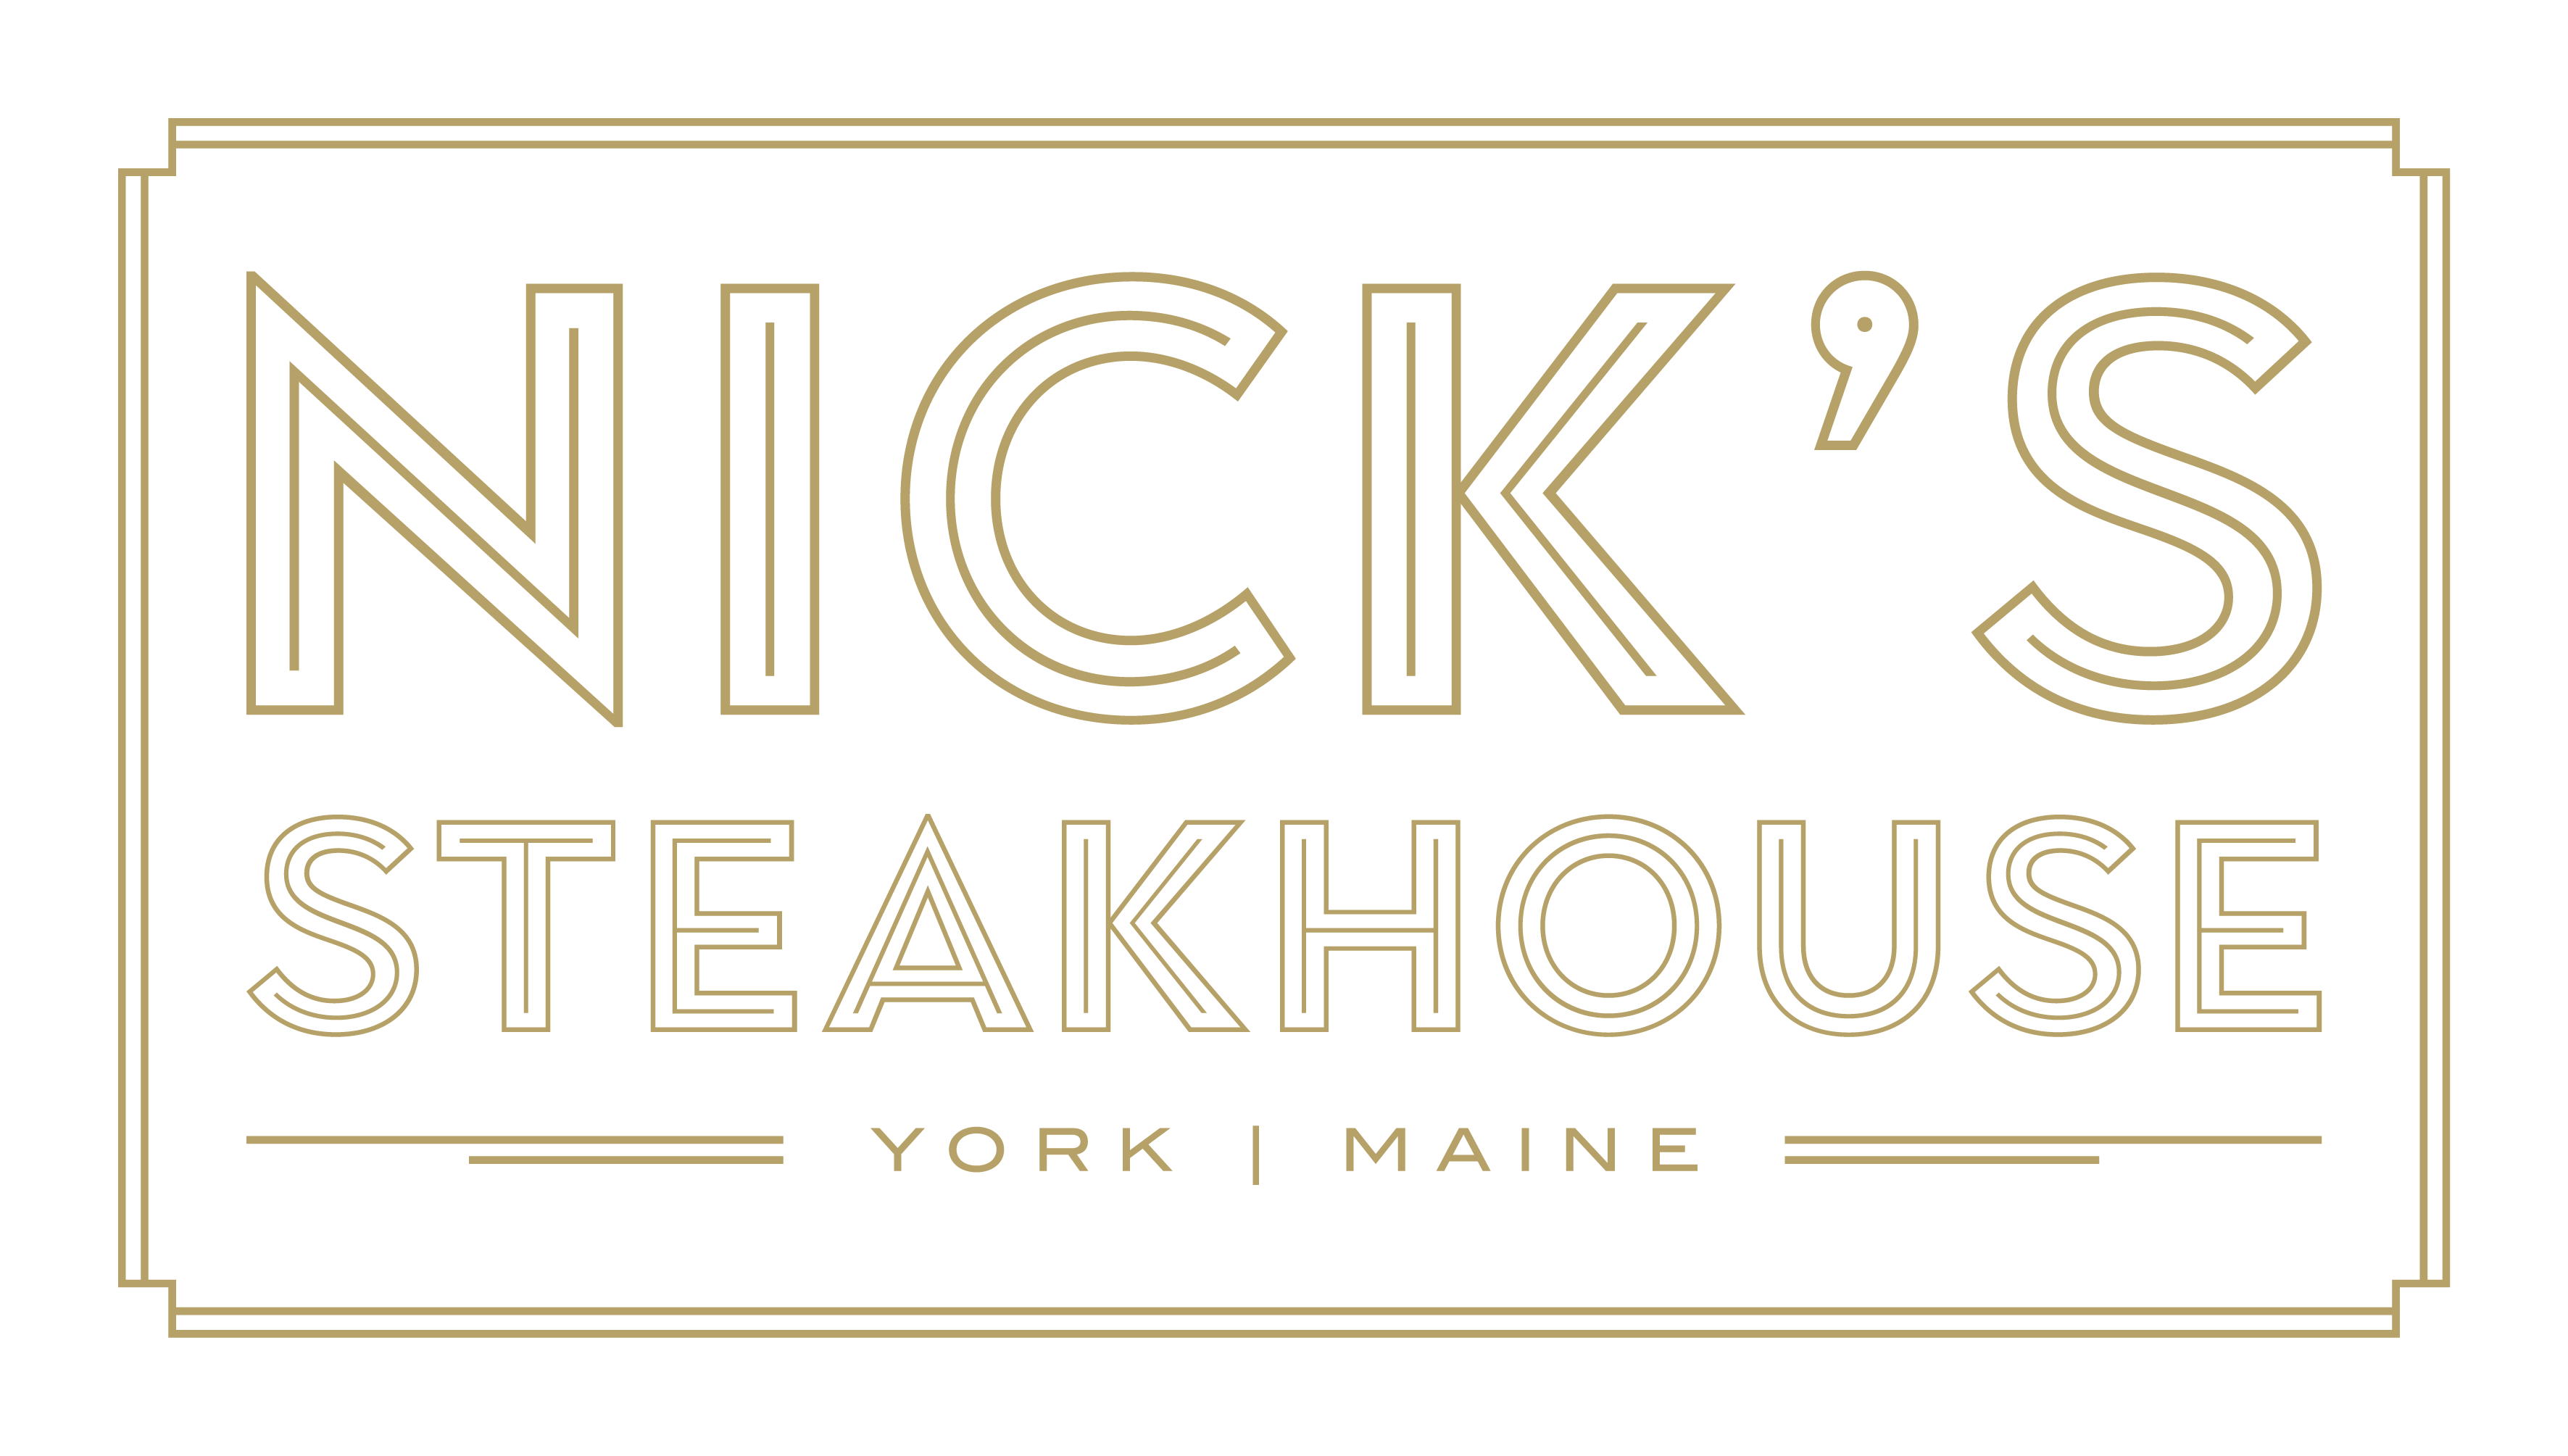 Nick's Steakhouse Shop